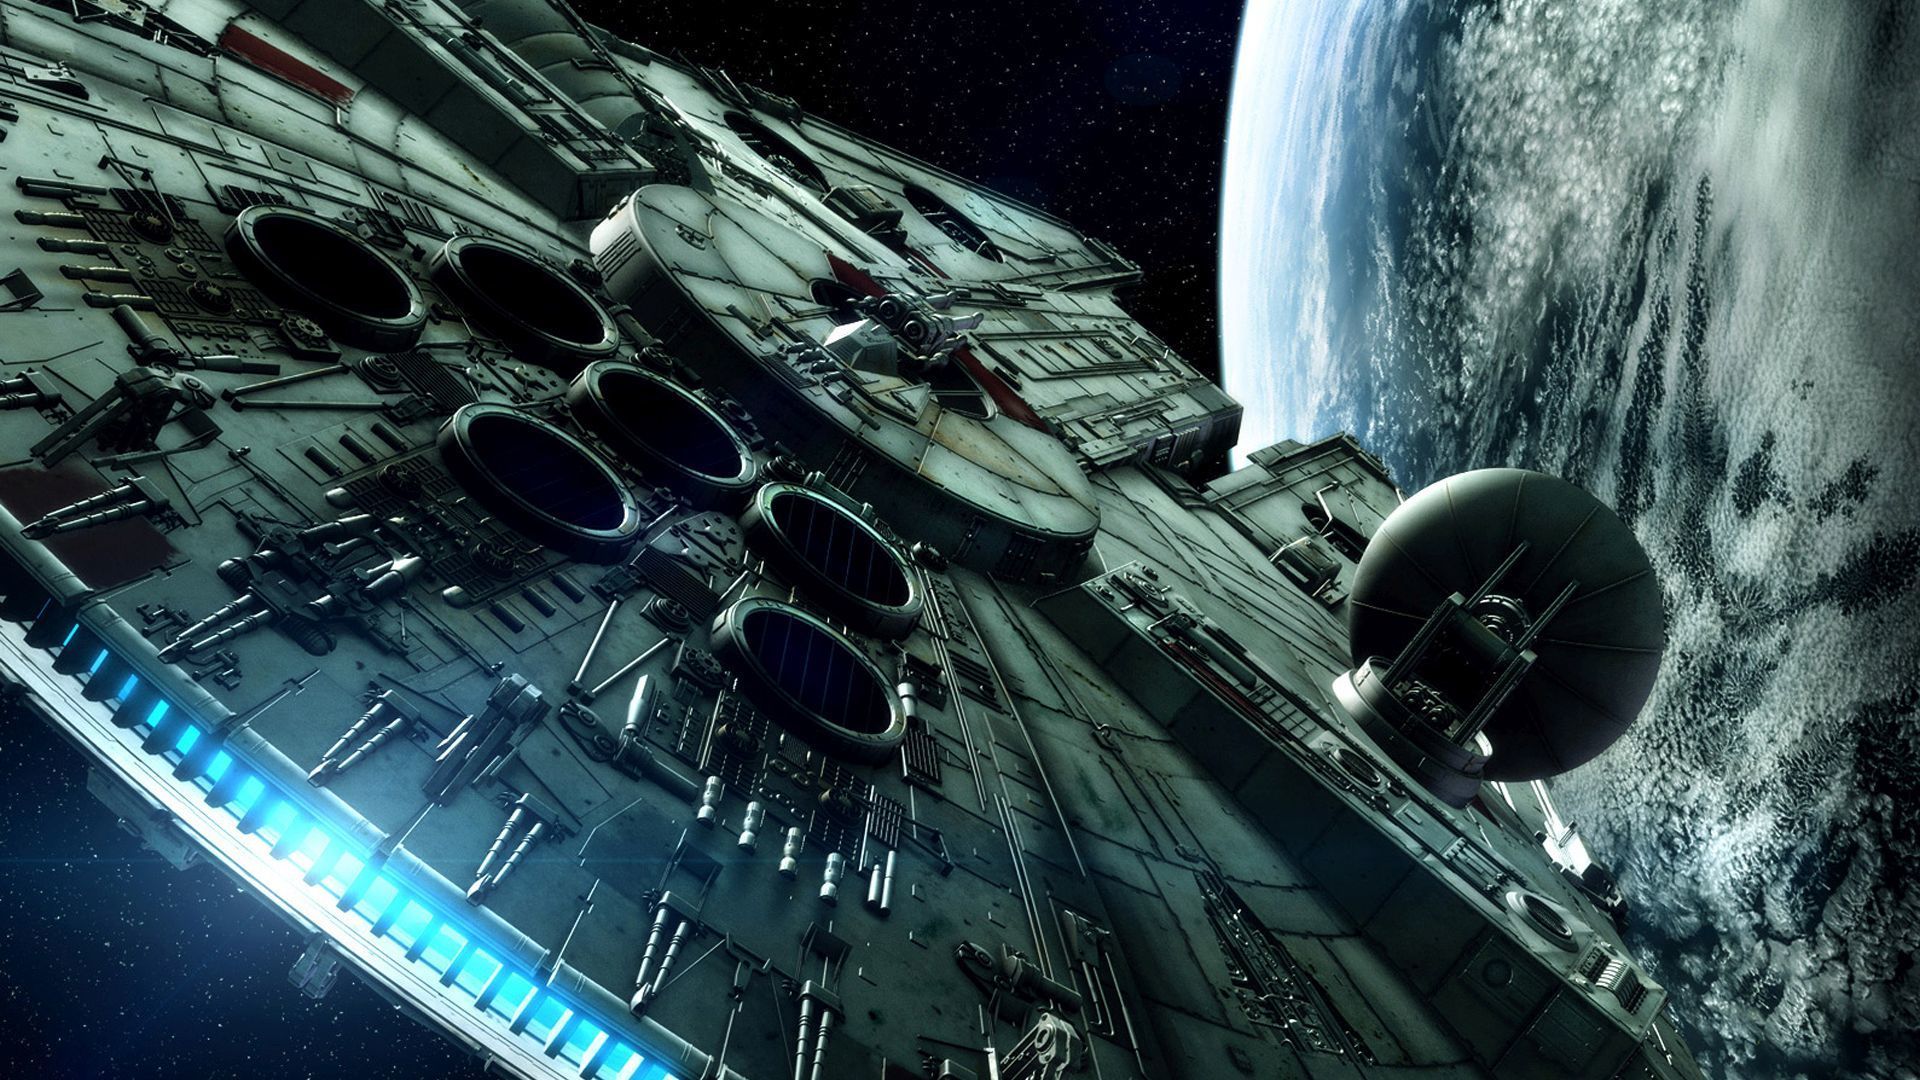 Star Wars Spaceship 1080p Movie Desktop Wallpaper